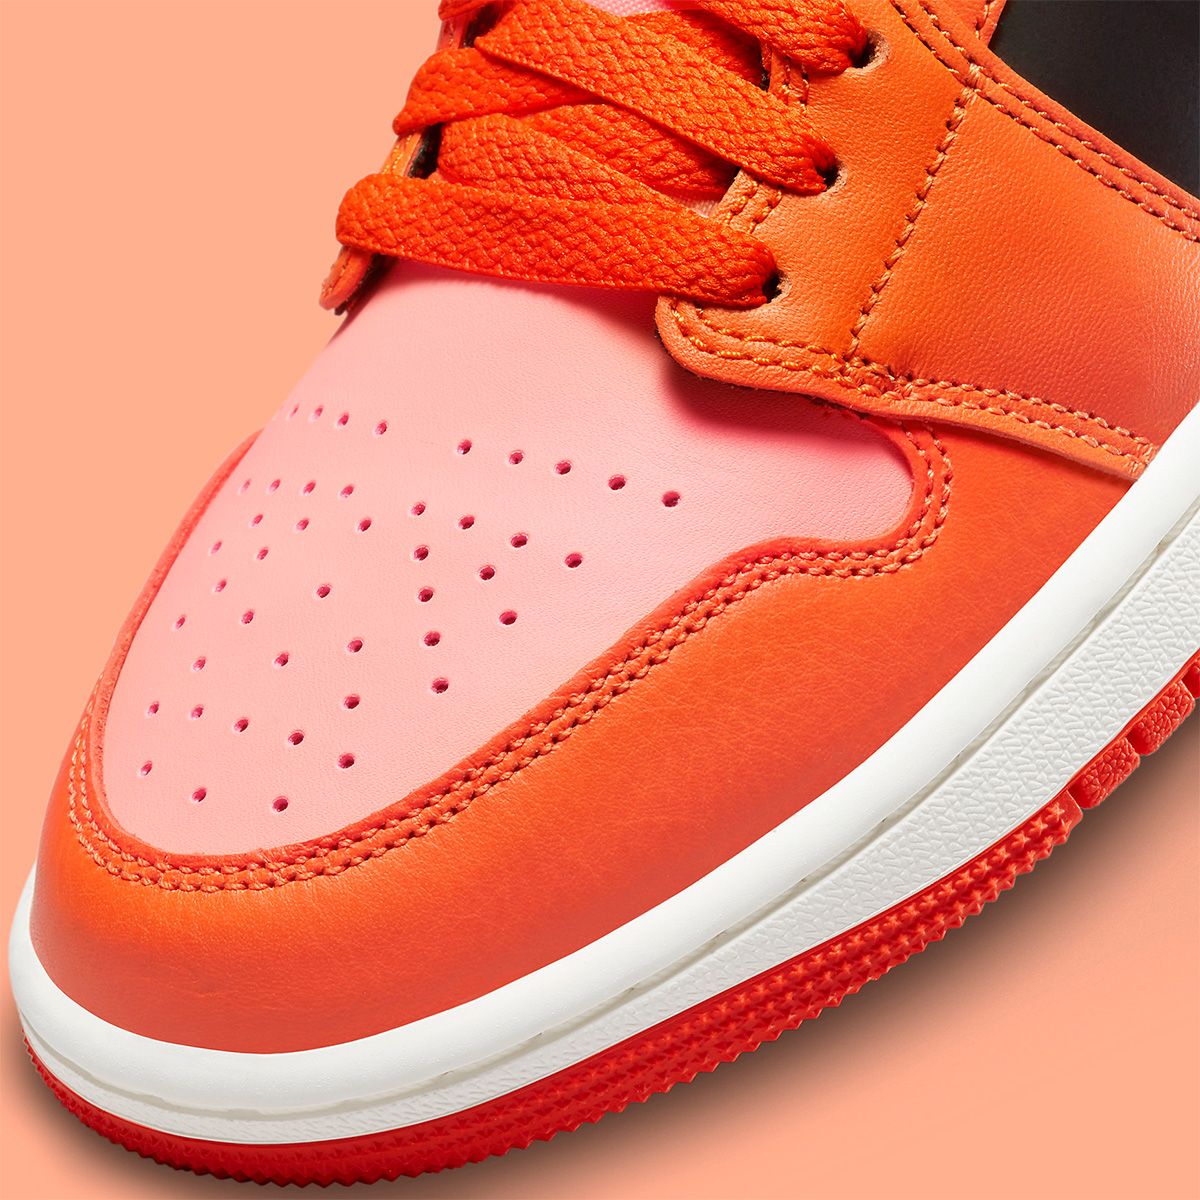 Available jordan 1s orange Now // Air Jordan 1 Mid "Crimson Bliss" | HOUSE OF HEAT